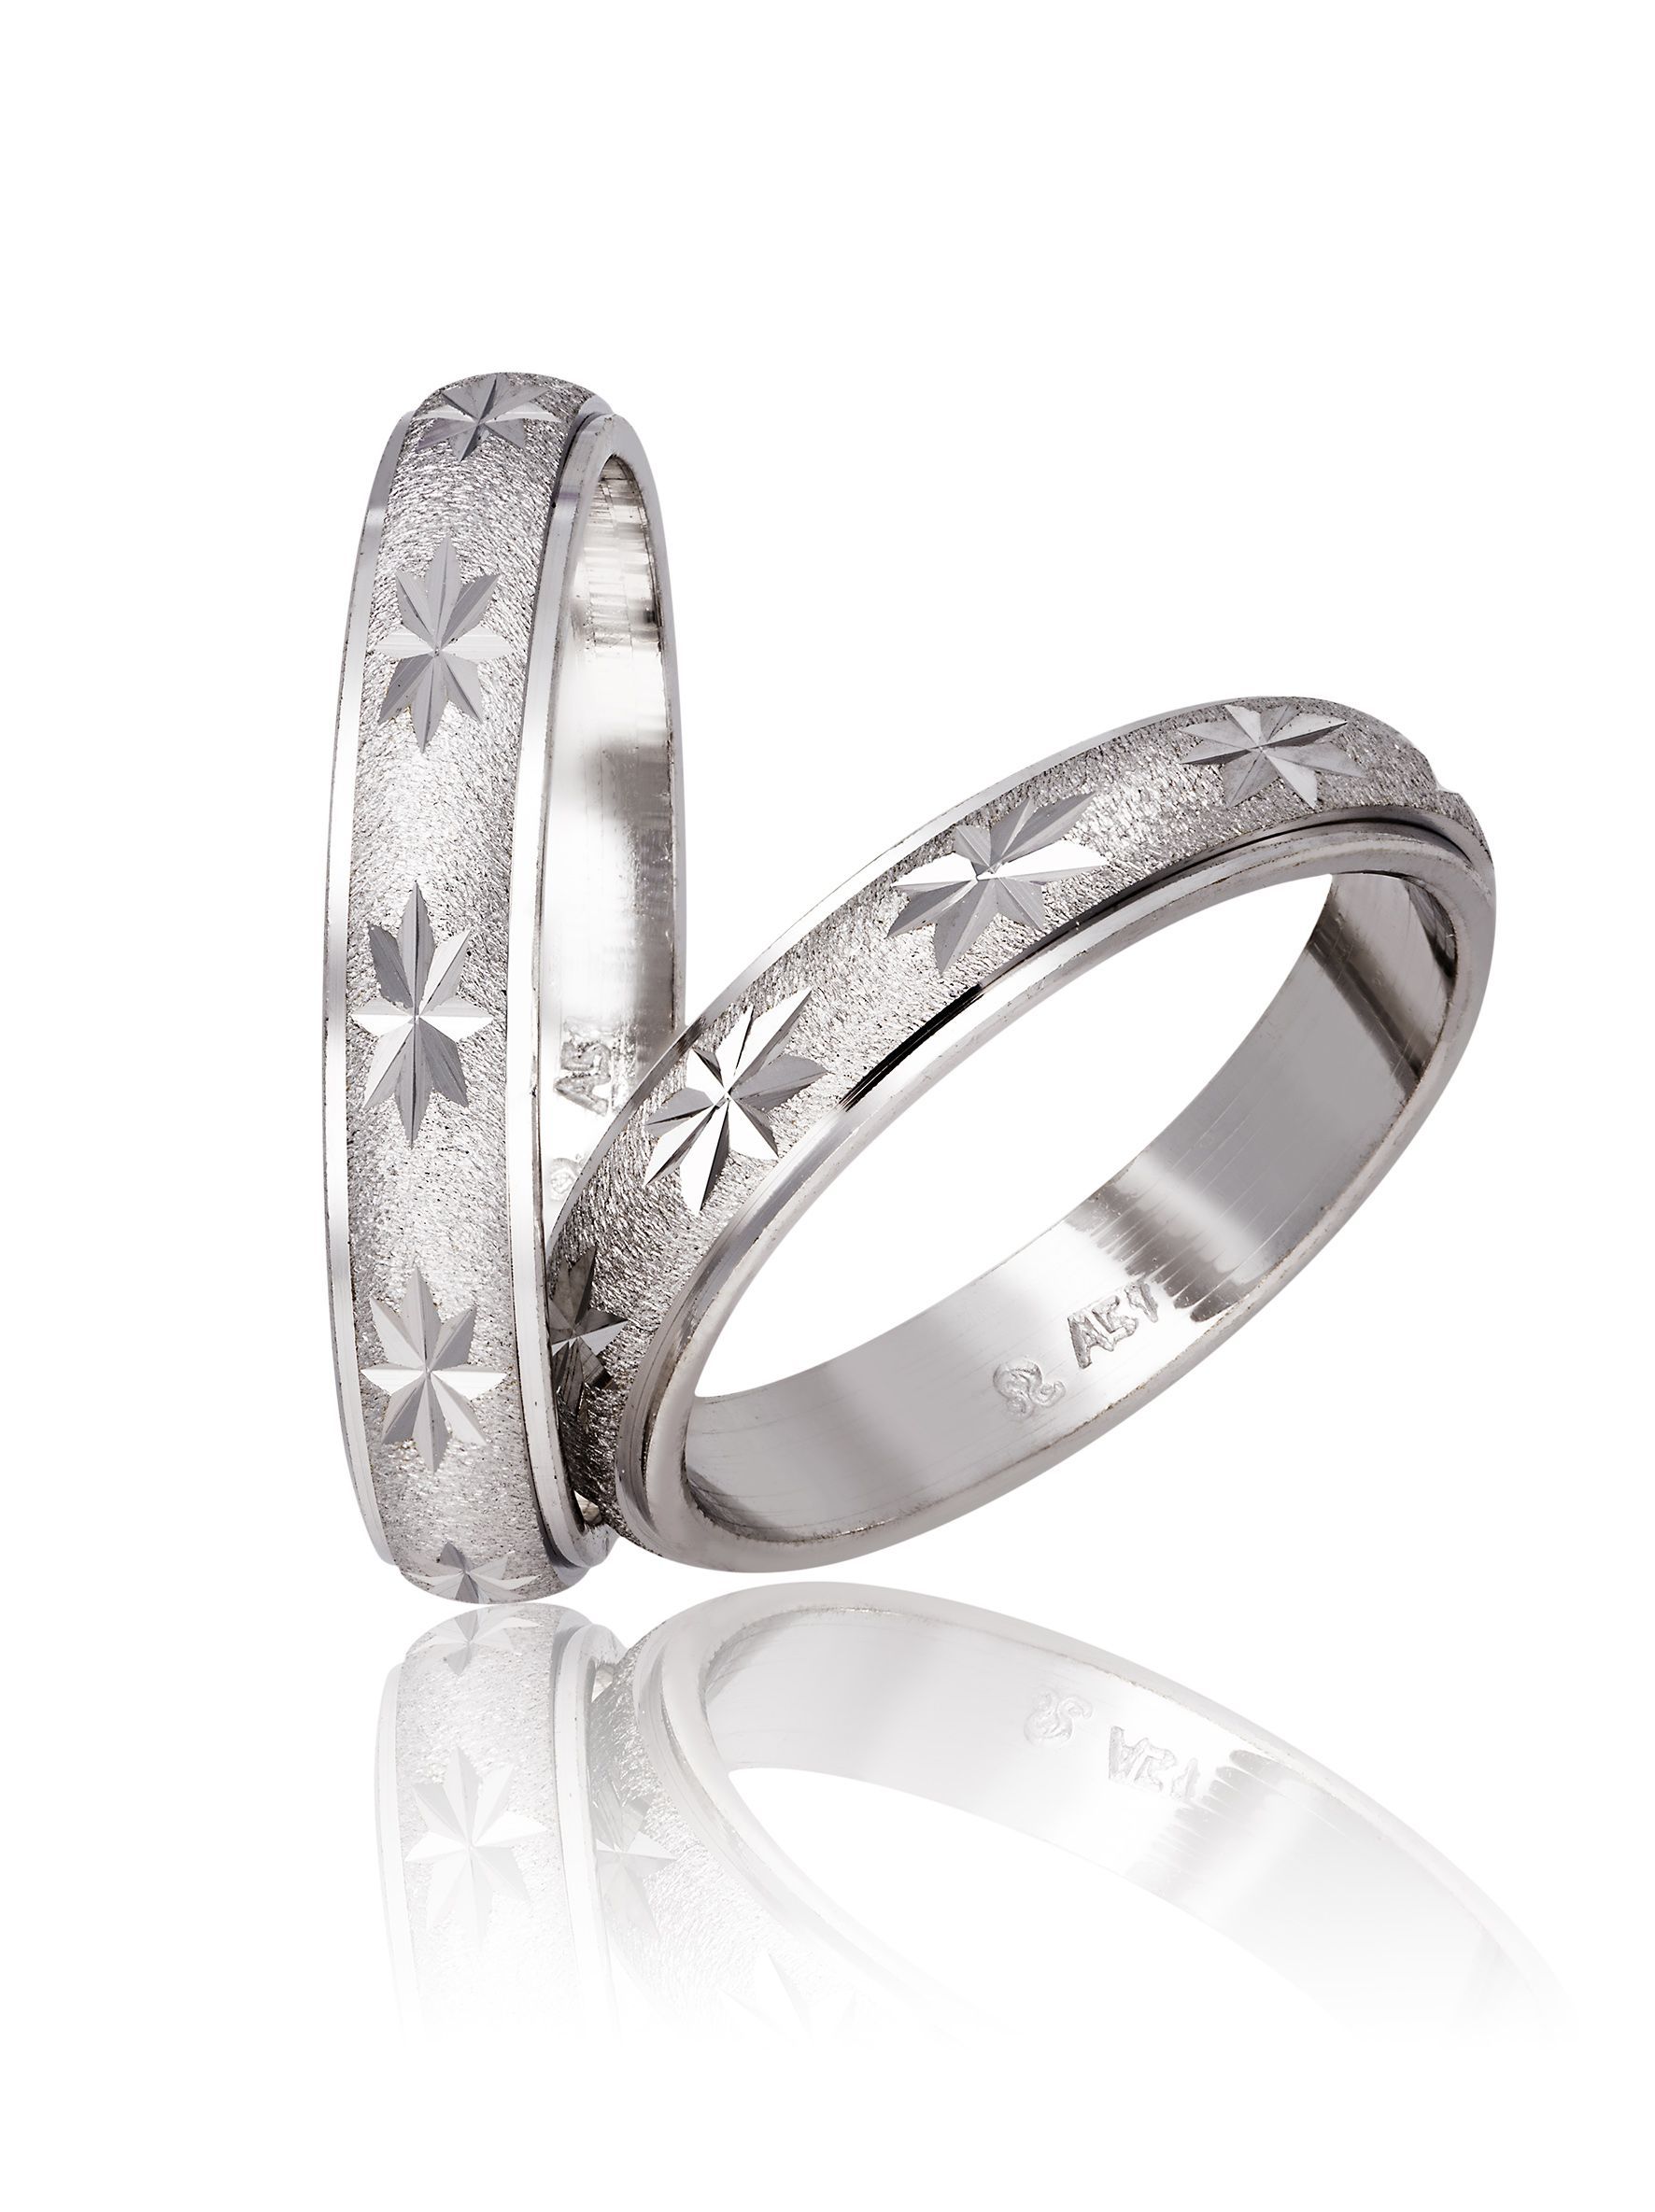 White gold wedding rings 4mm  (code 757)